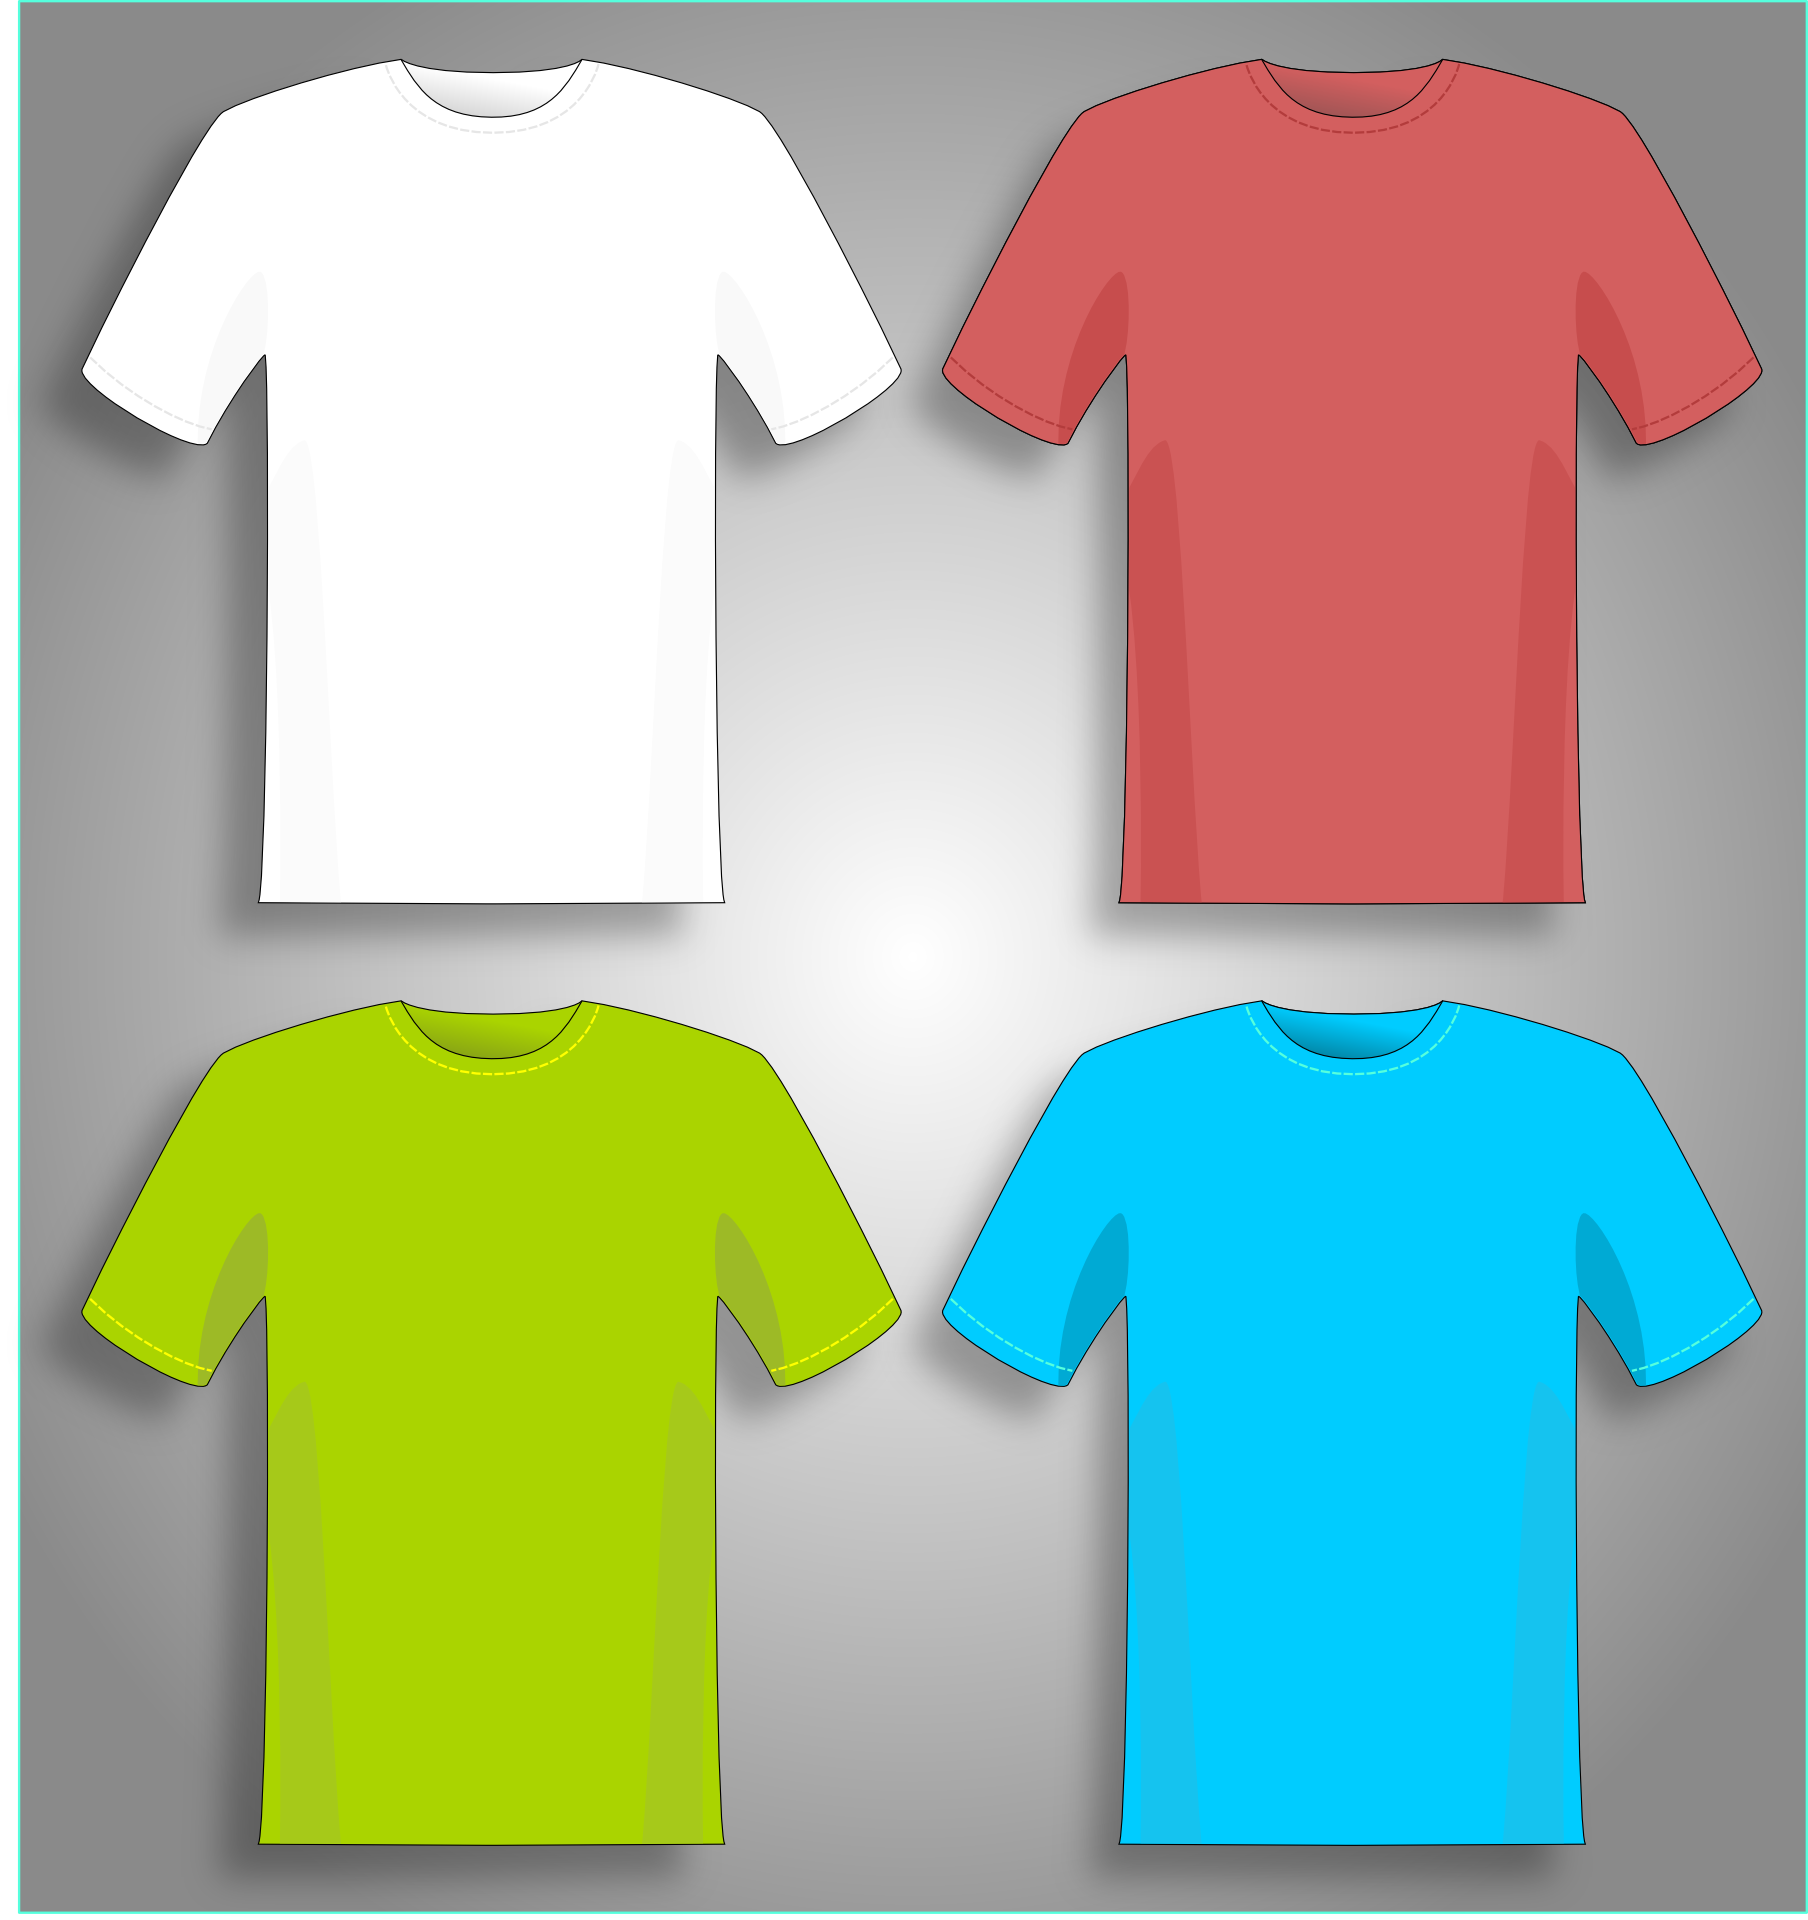 How to Start an Online T Shirt Business-34723ad0